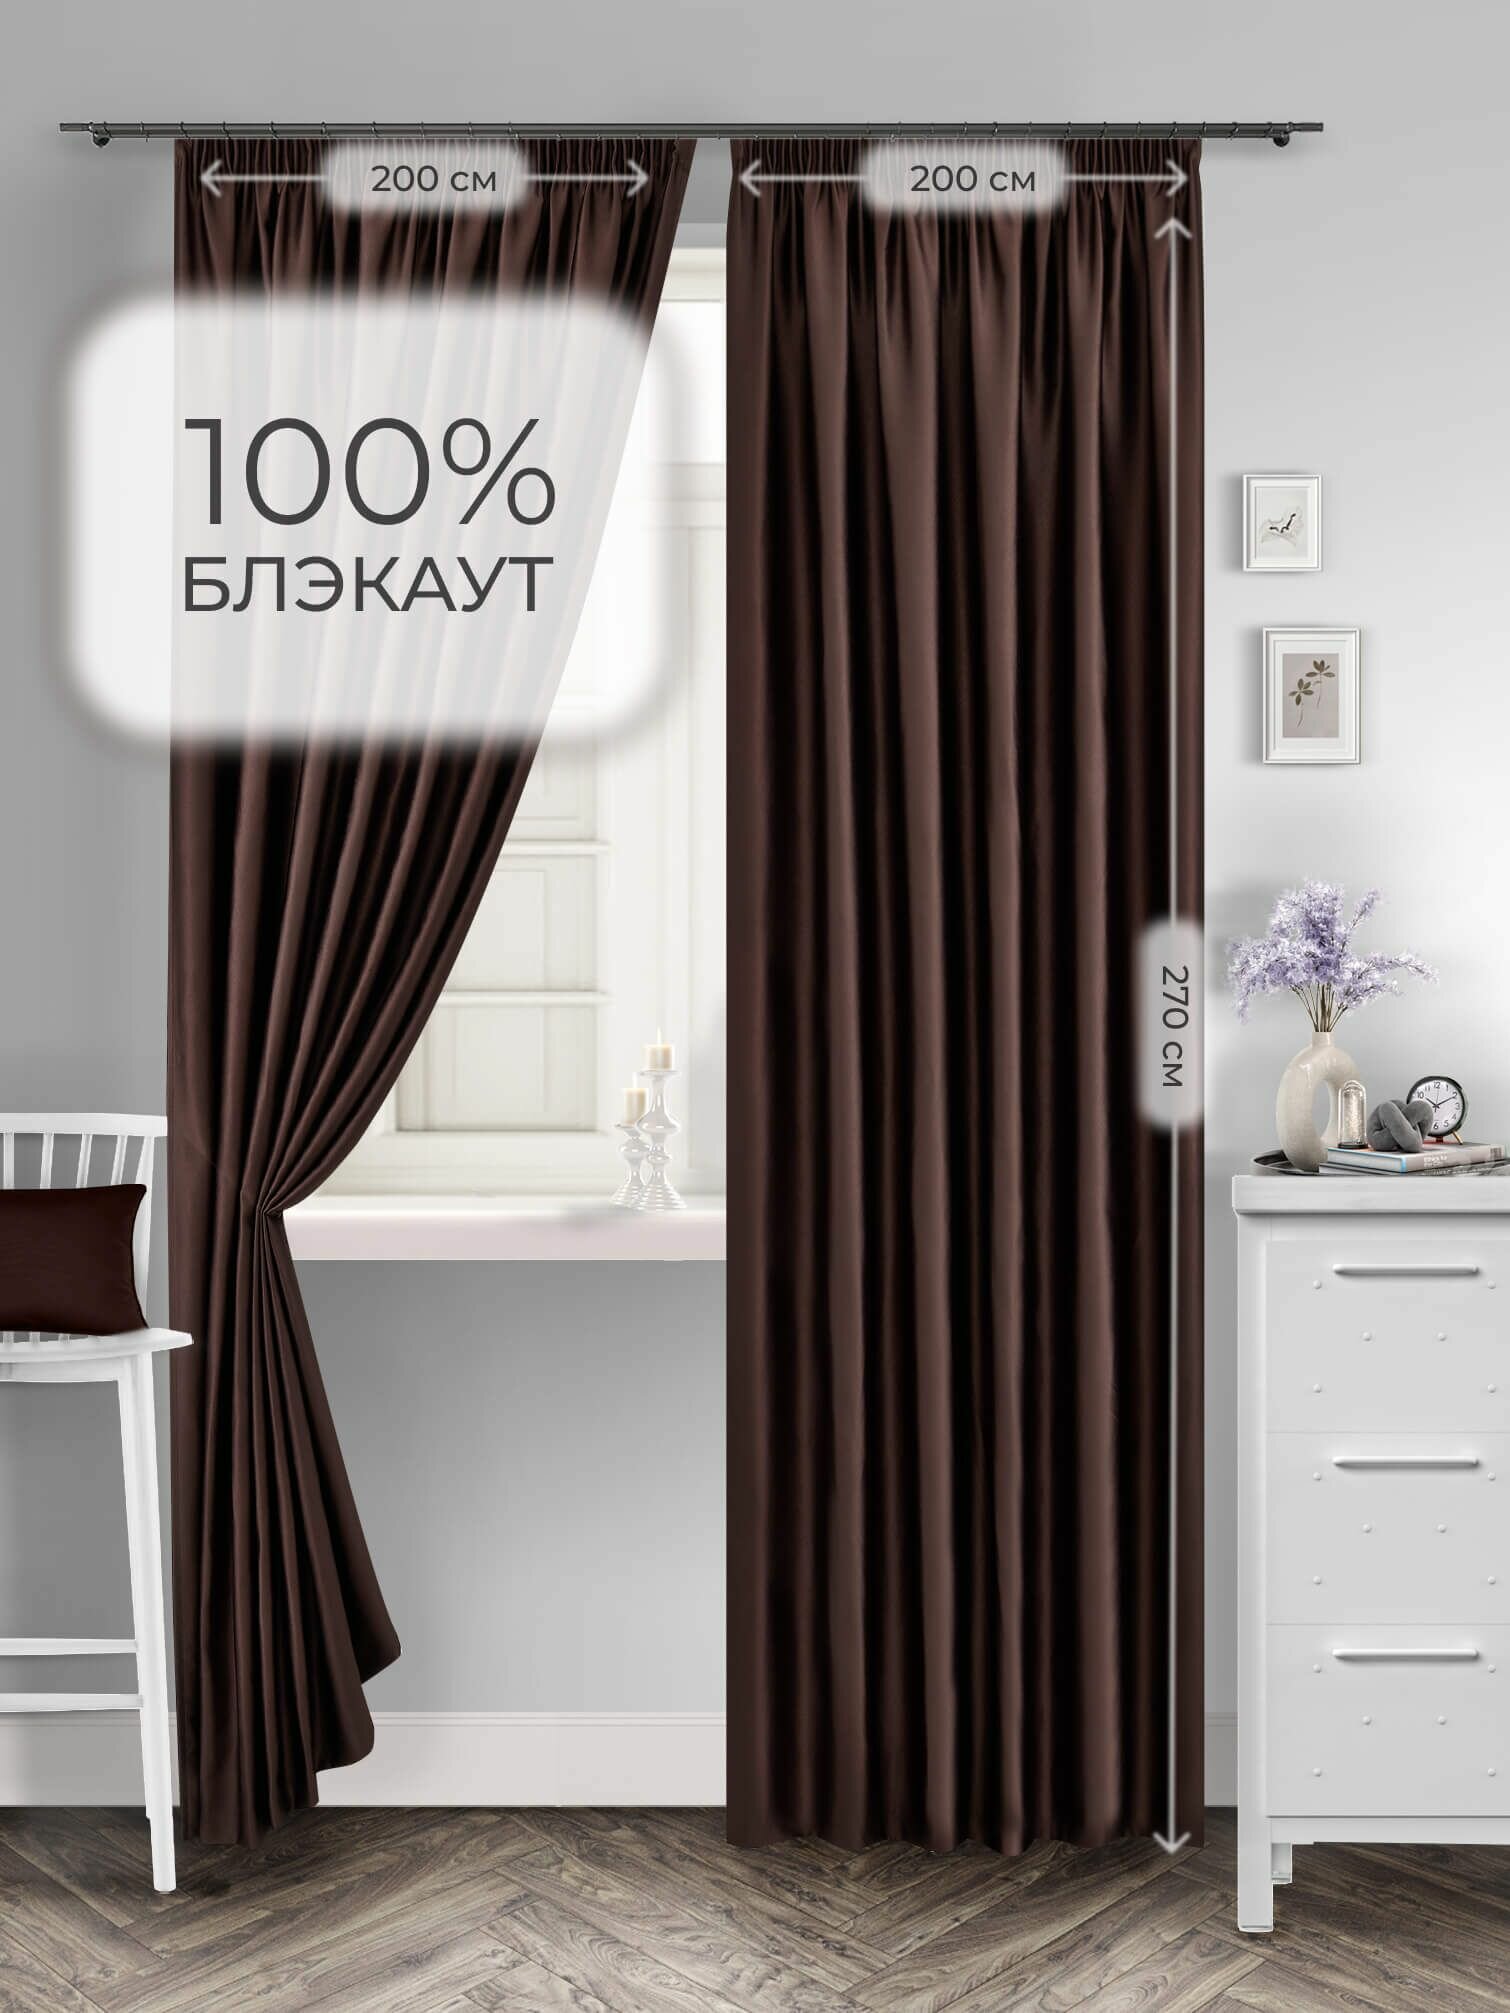 Комплект штор для комнаты Shtoraland Блэкаут 100% серый 150x270 см - 2 шт однотонные светонепроницаемые.